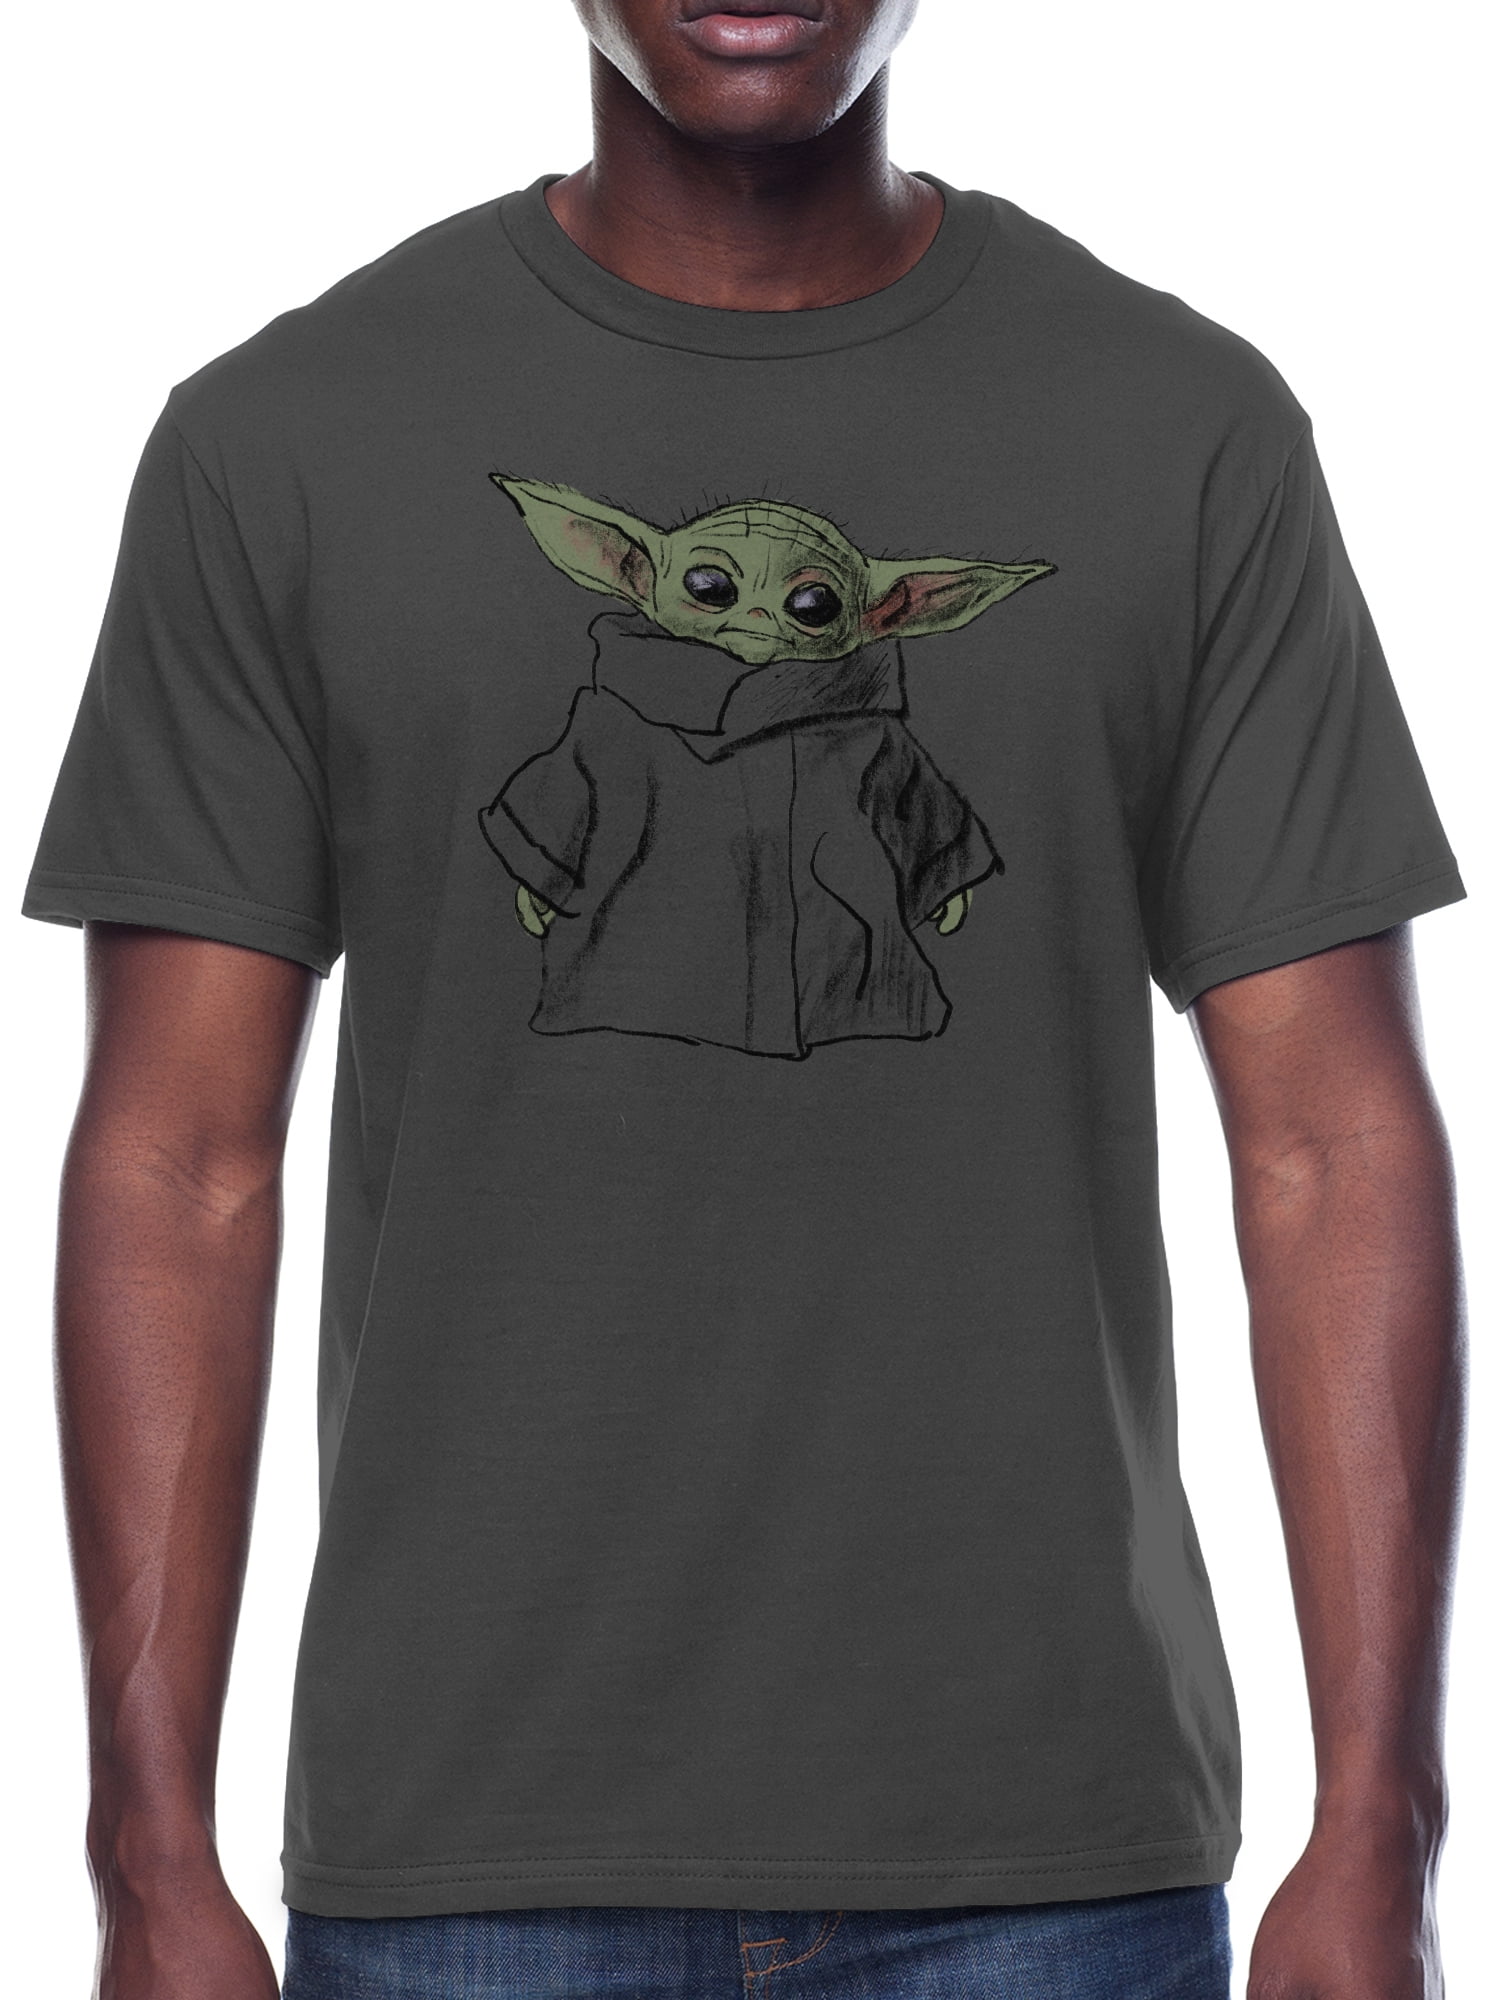 Airbrushed Yoda T-shirt nurse scrub top